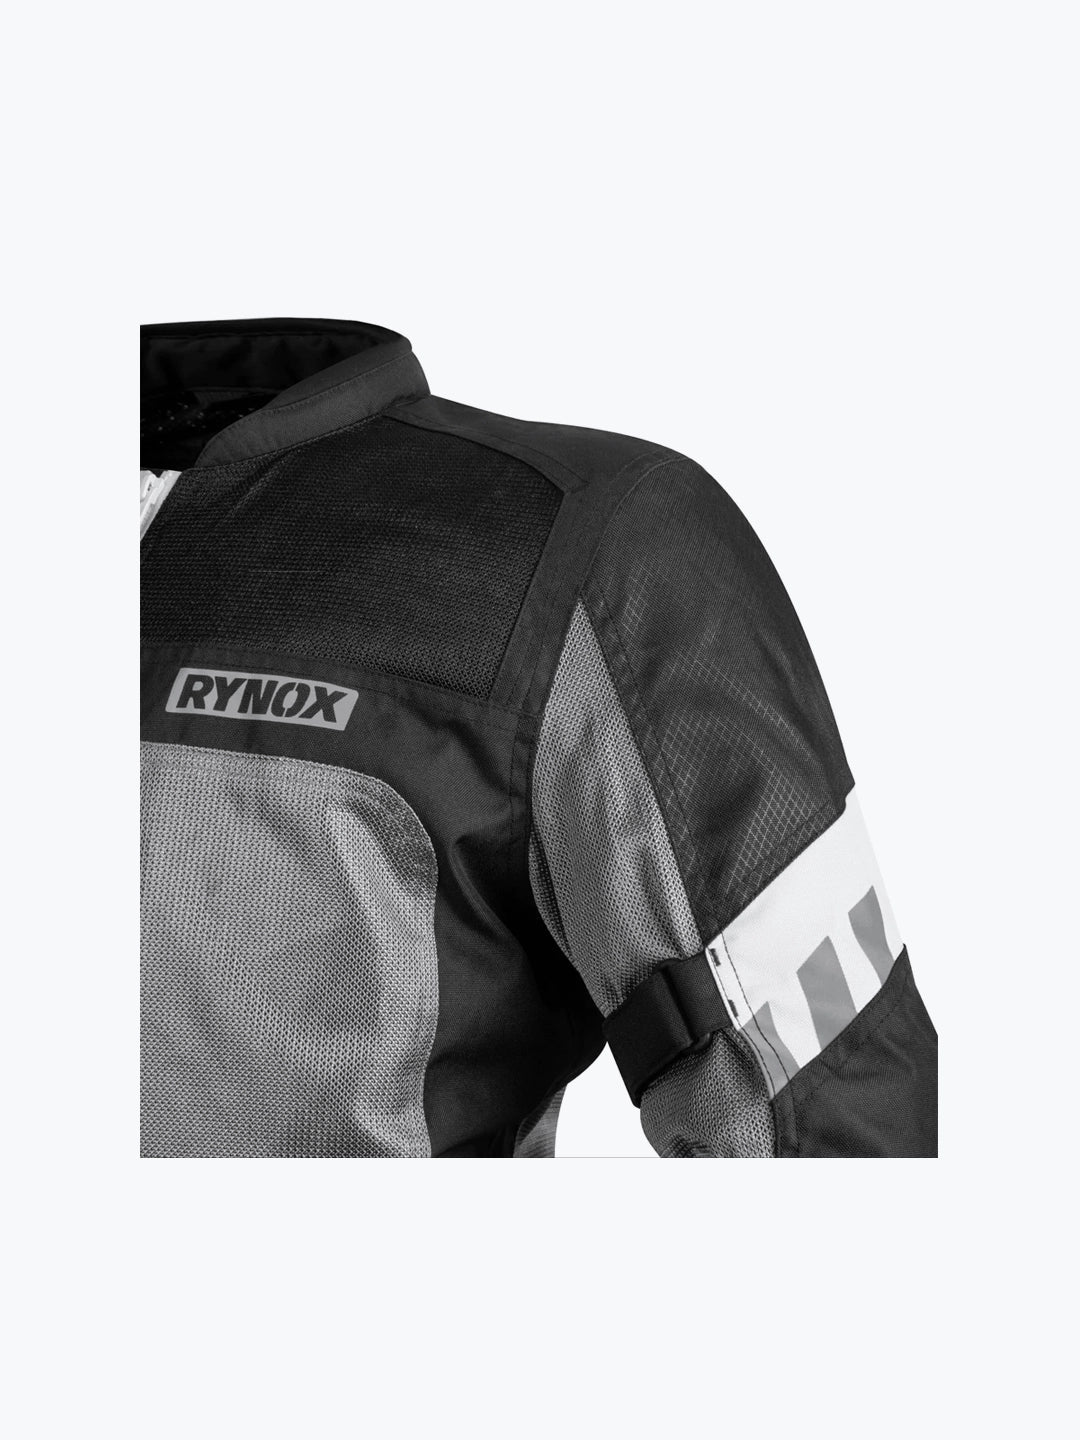 Rynox Helium GT 2 Jacket Black